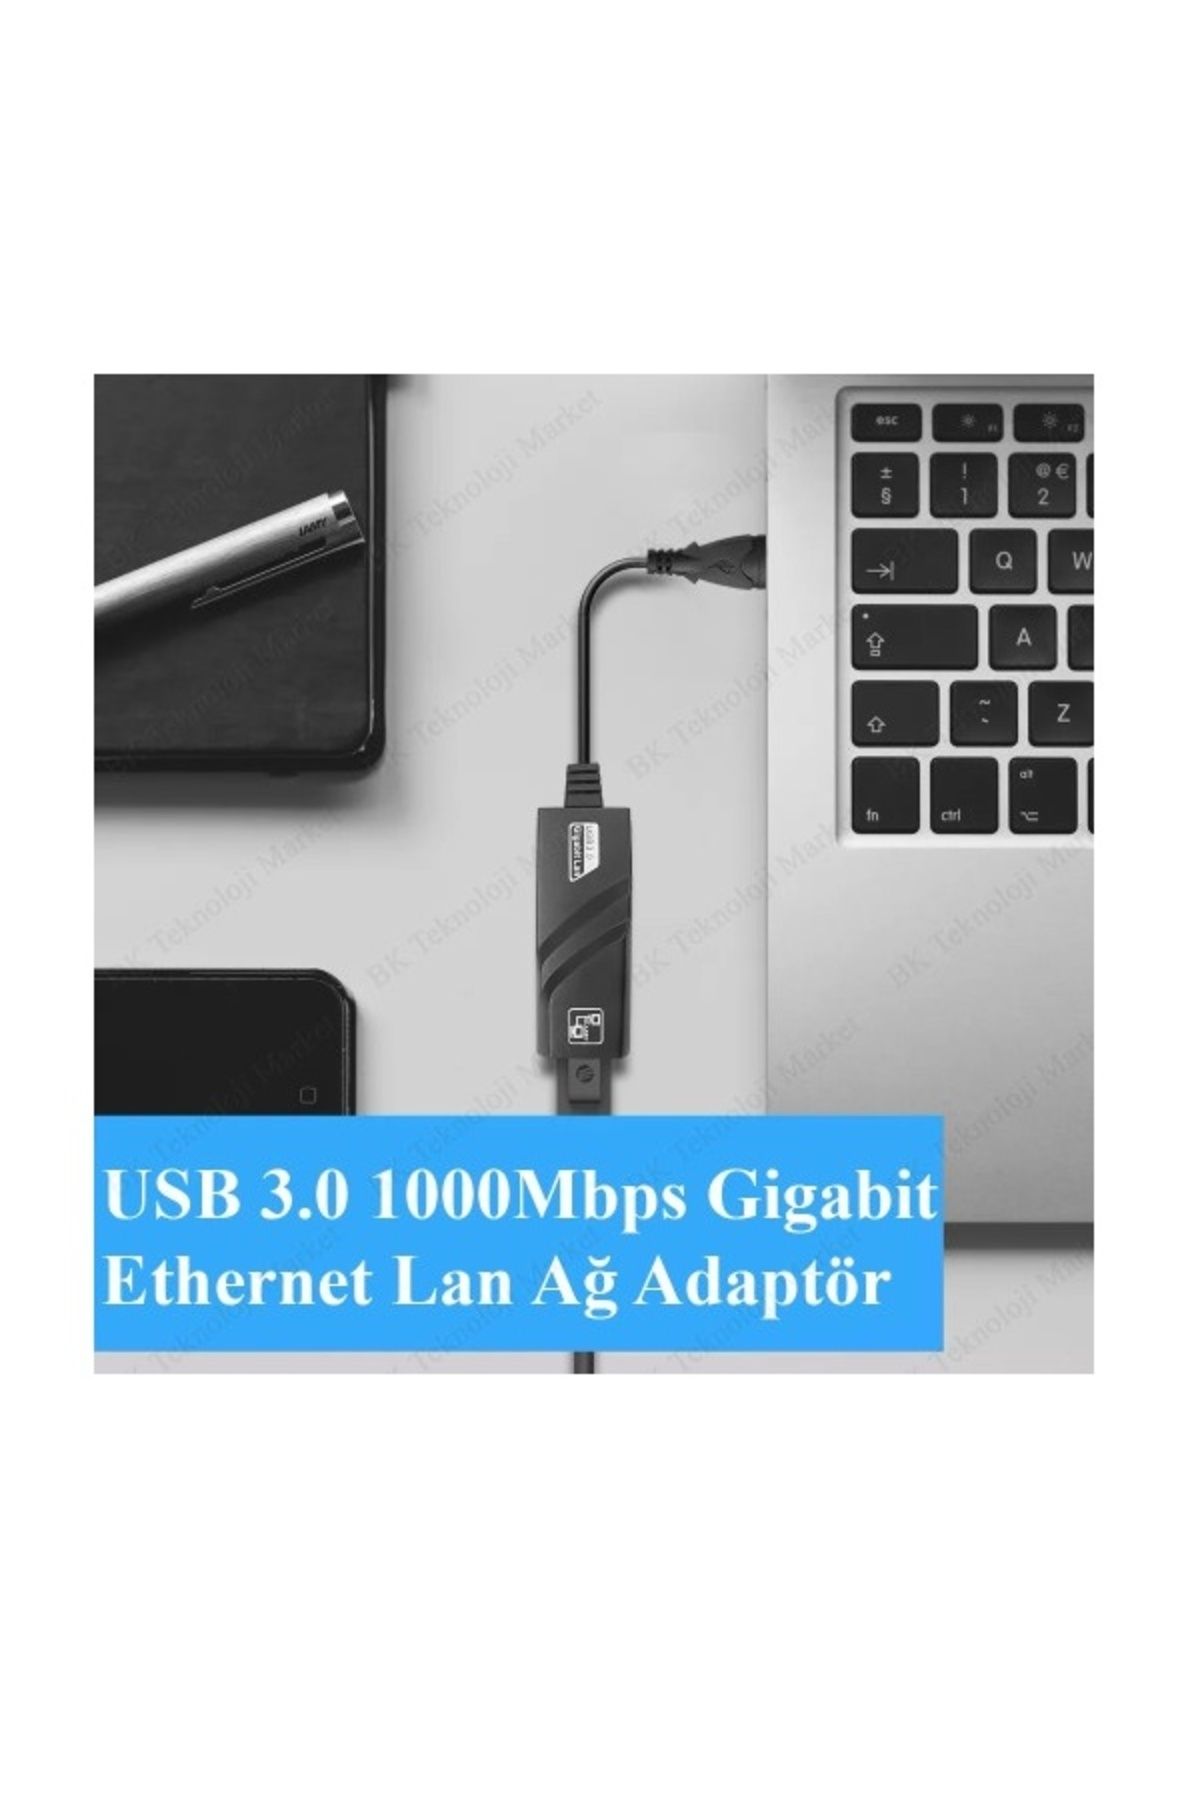 İstanbul Teknoloji USB 3.0 1000Mbps Gigabit Ethernet Lan Ağ Adaptör